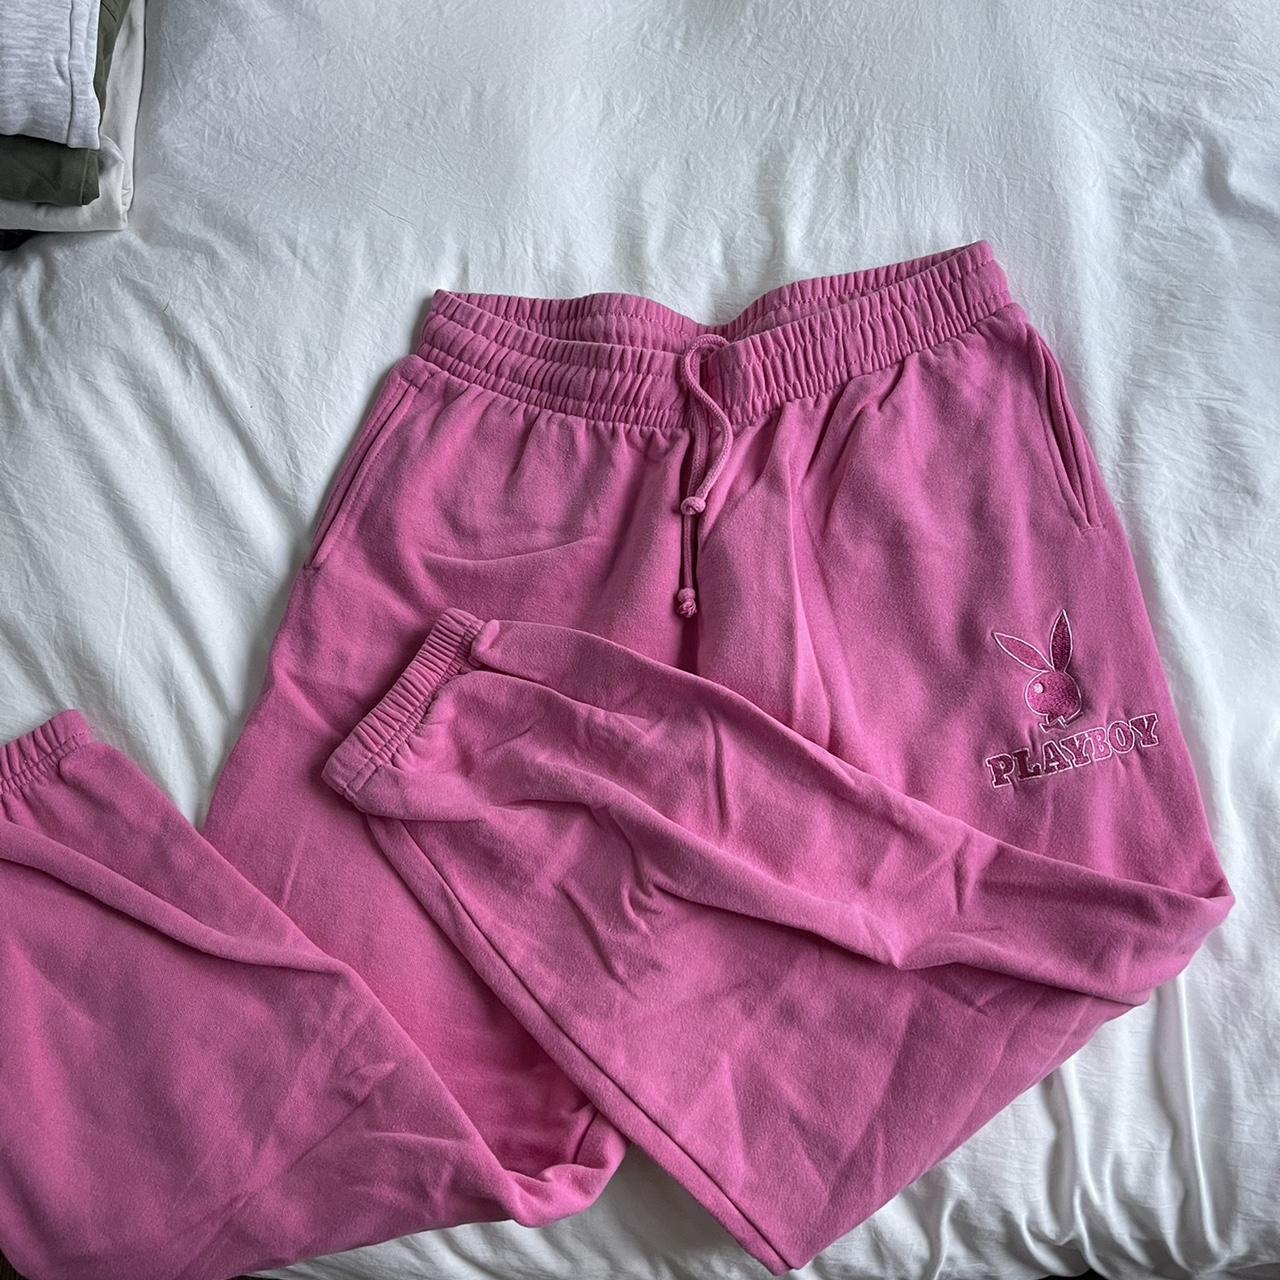 Pink Playboy Velour Track Pants